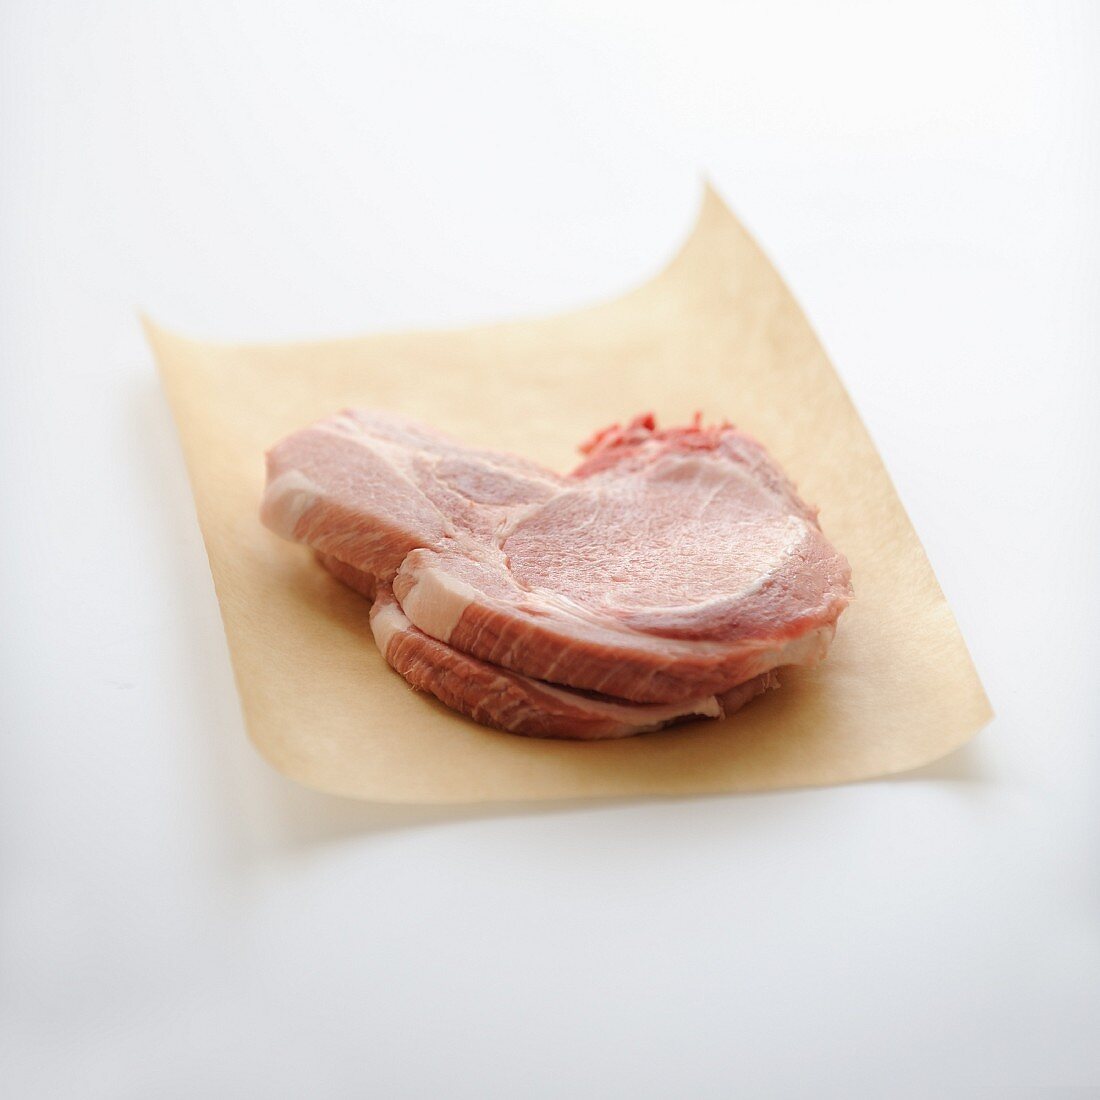 Raw pork chops on brown paper